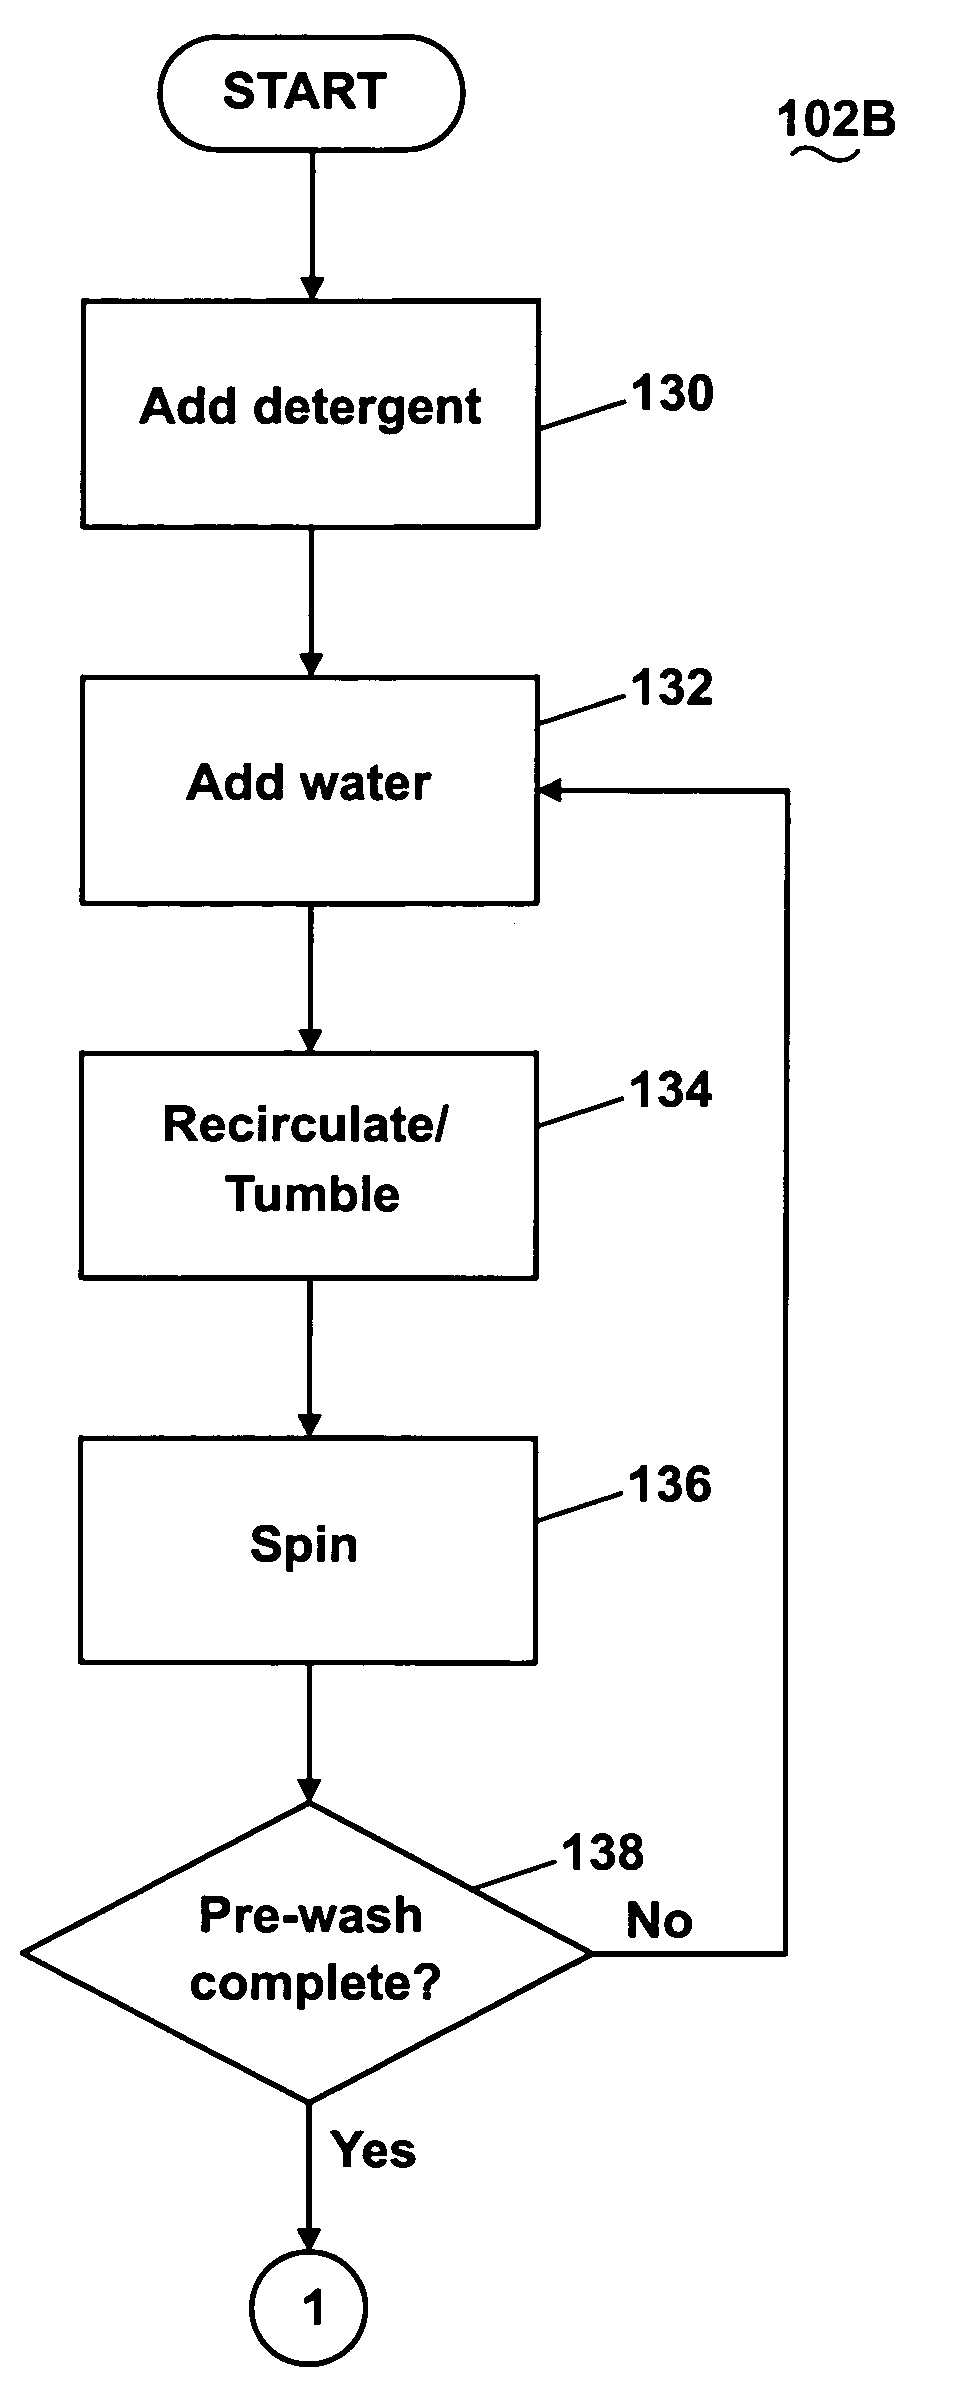 Method of operating a washing machine using steam